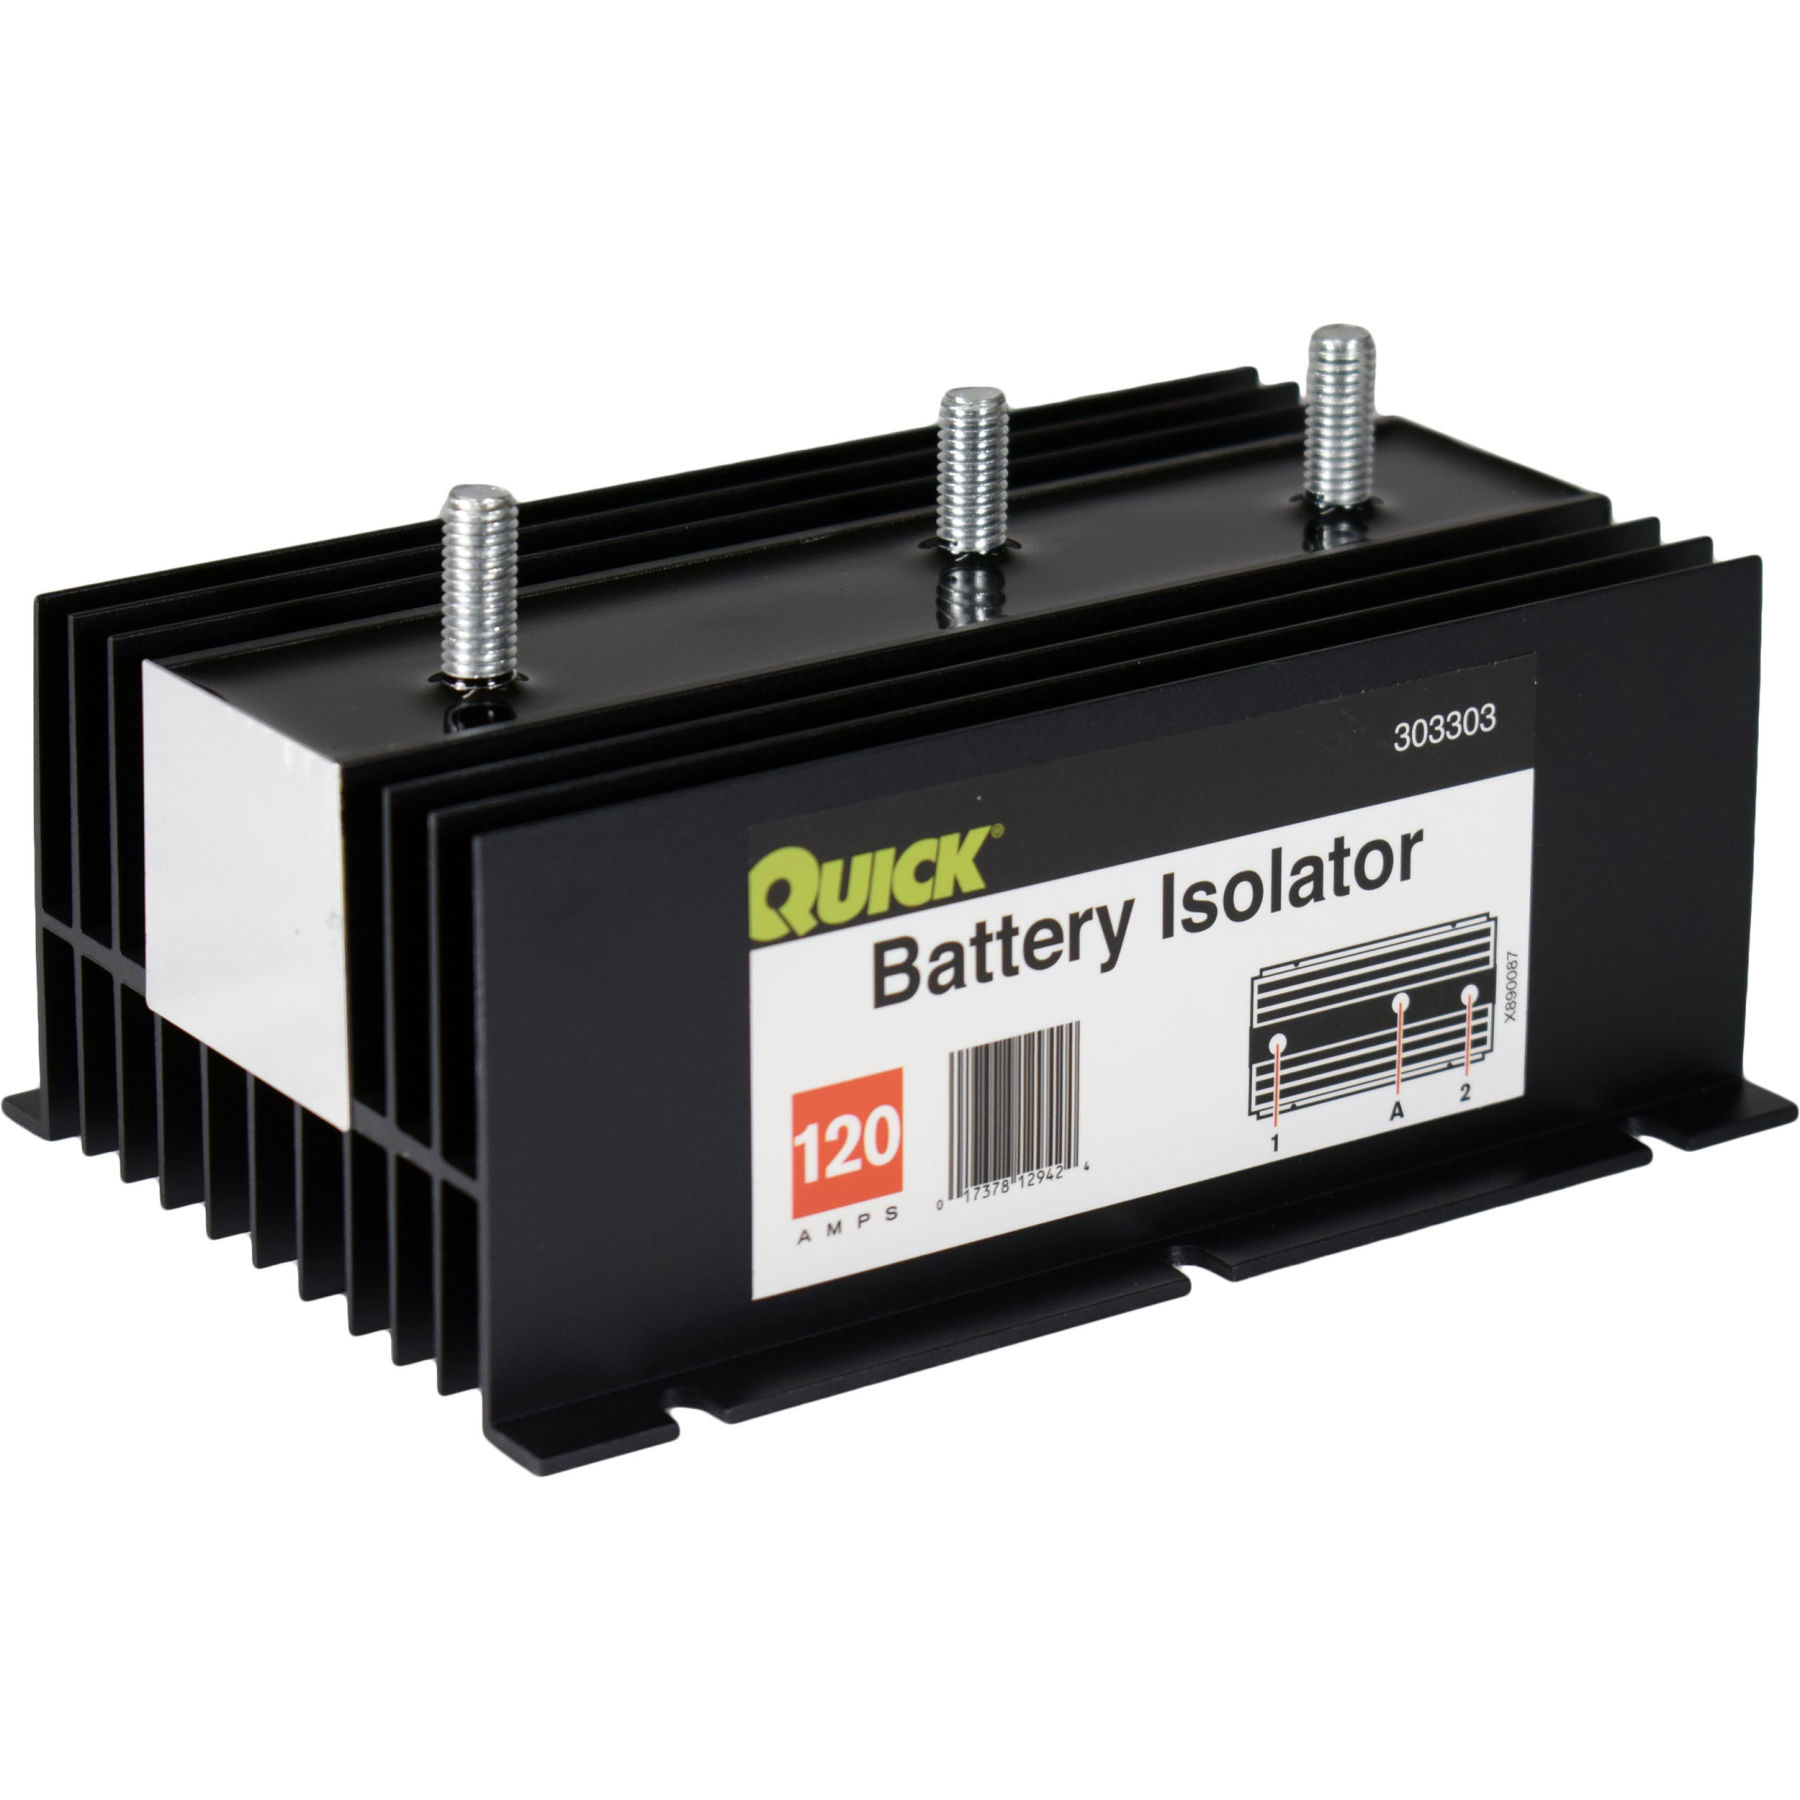 Quick Power 120 Amp Battery Isolator